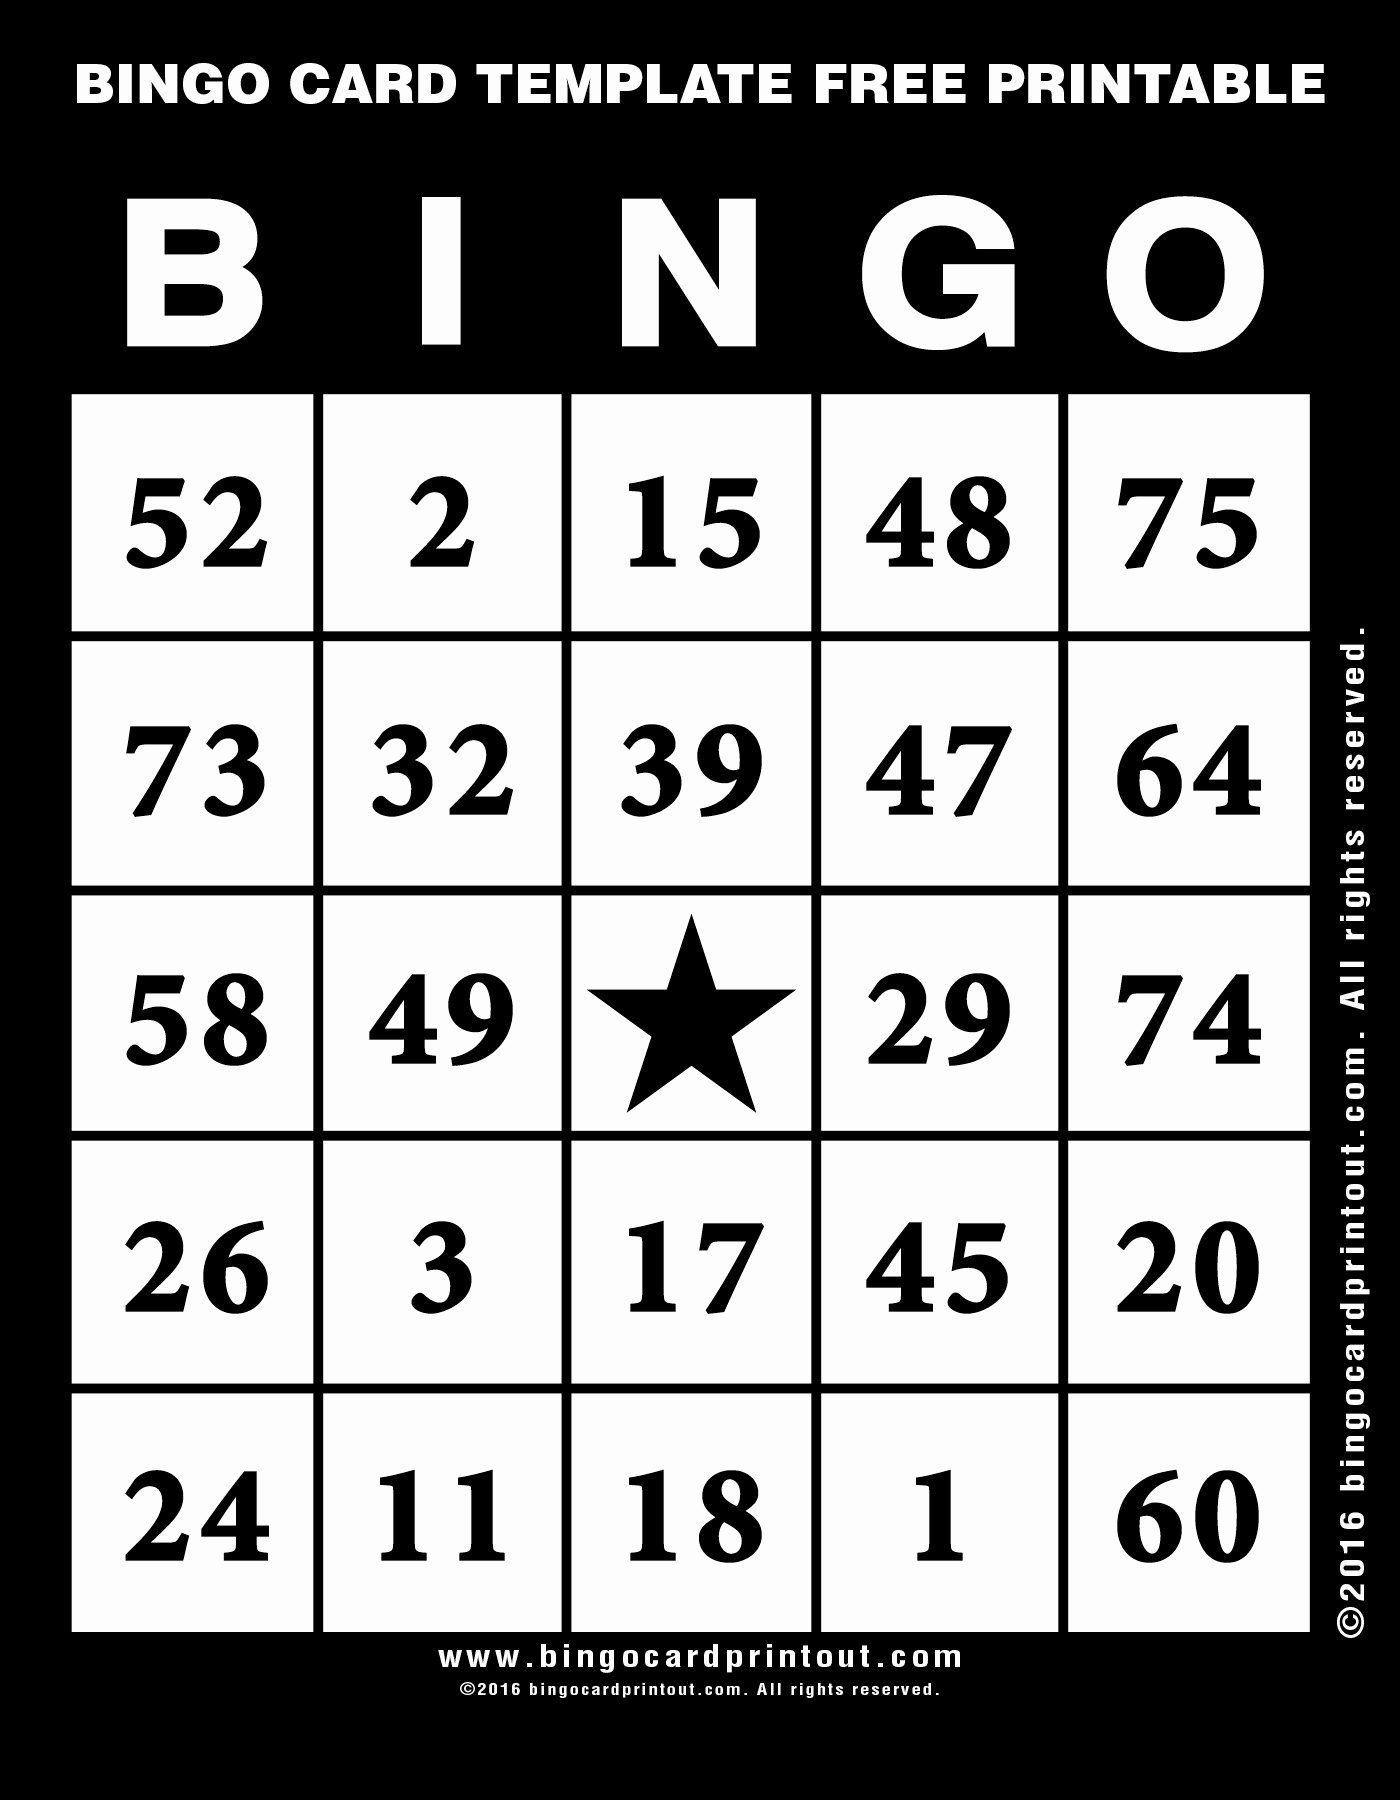 Bingo Card Template Free Printable Bingocardprintout